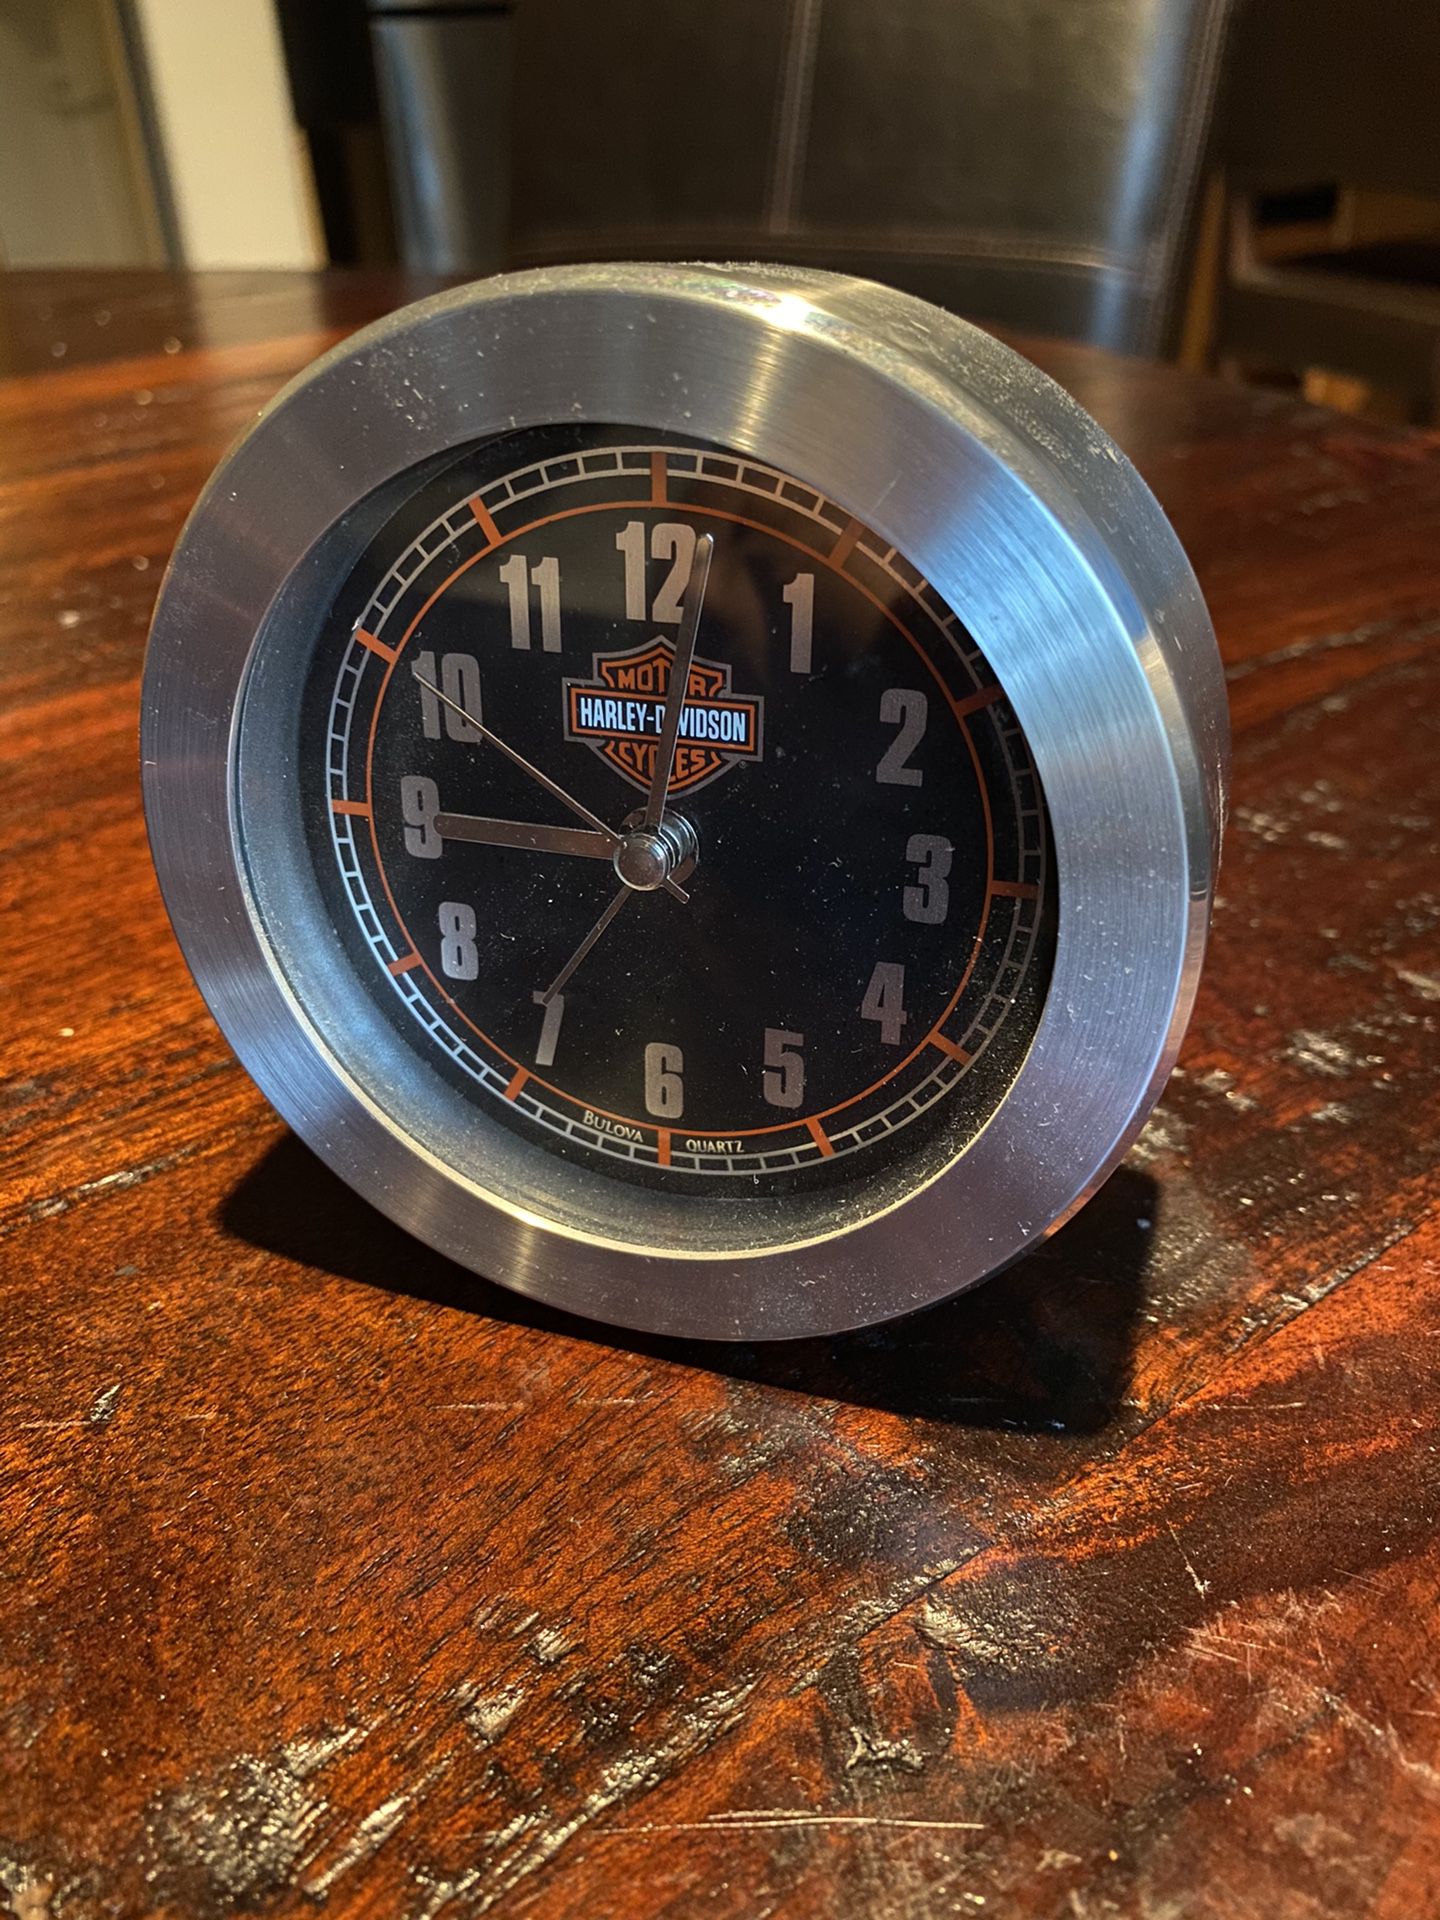 Harley Davidson desktop alarm clock